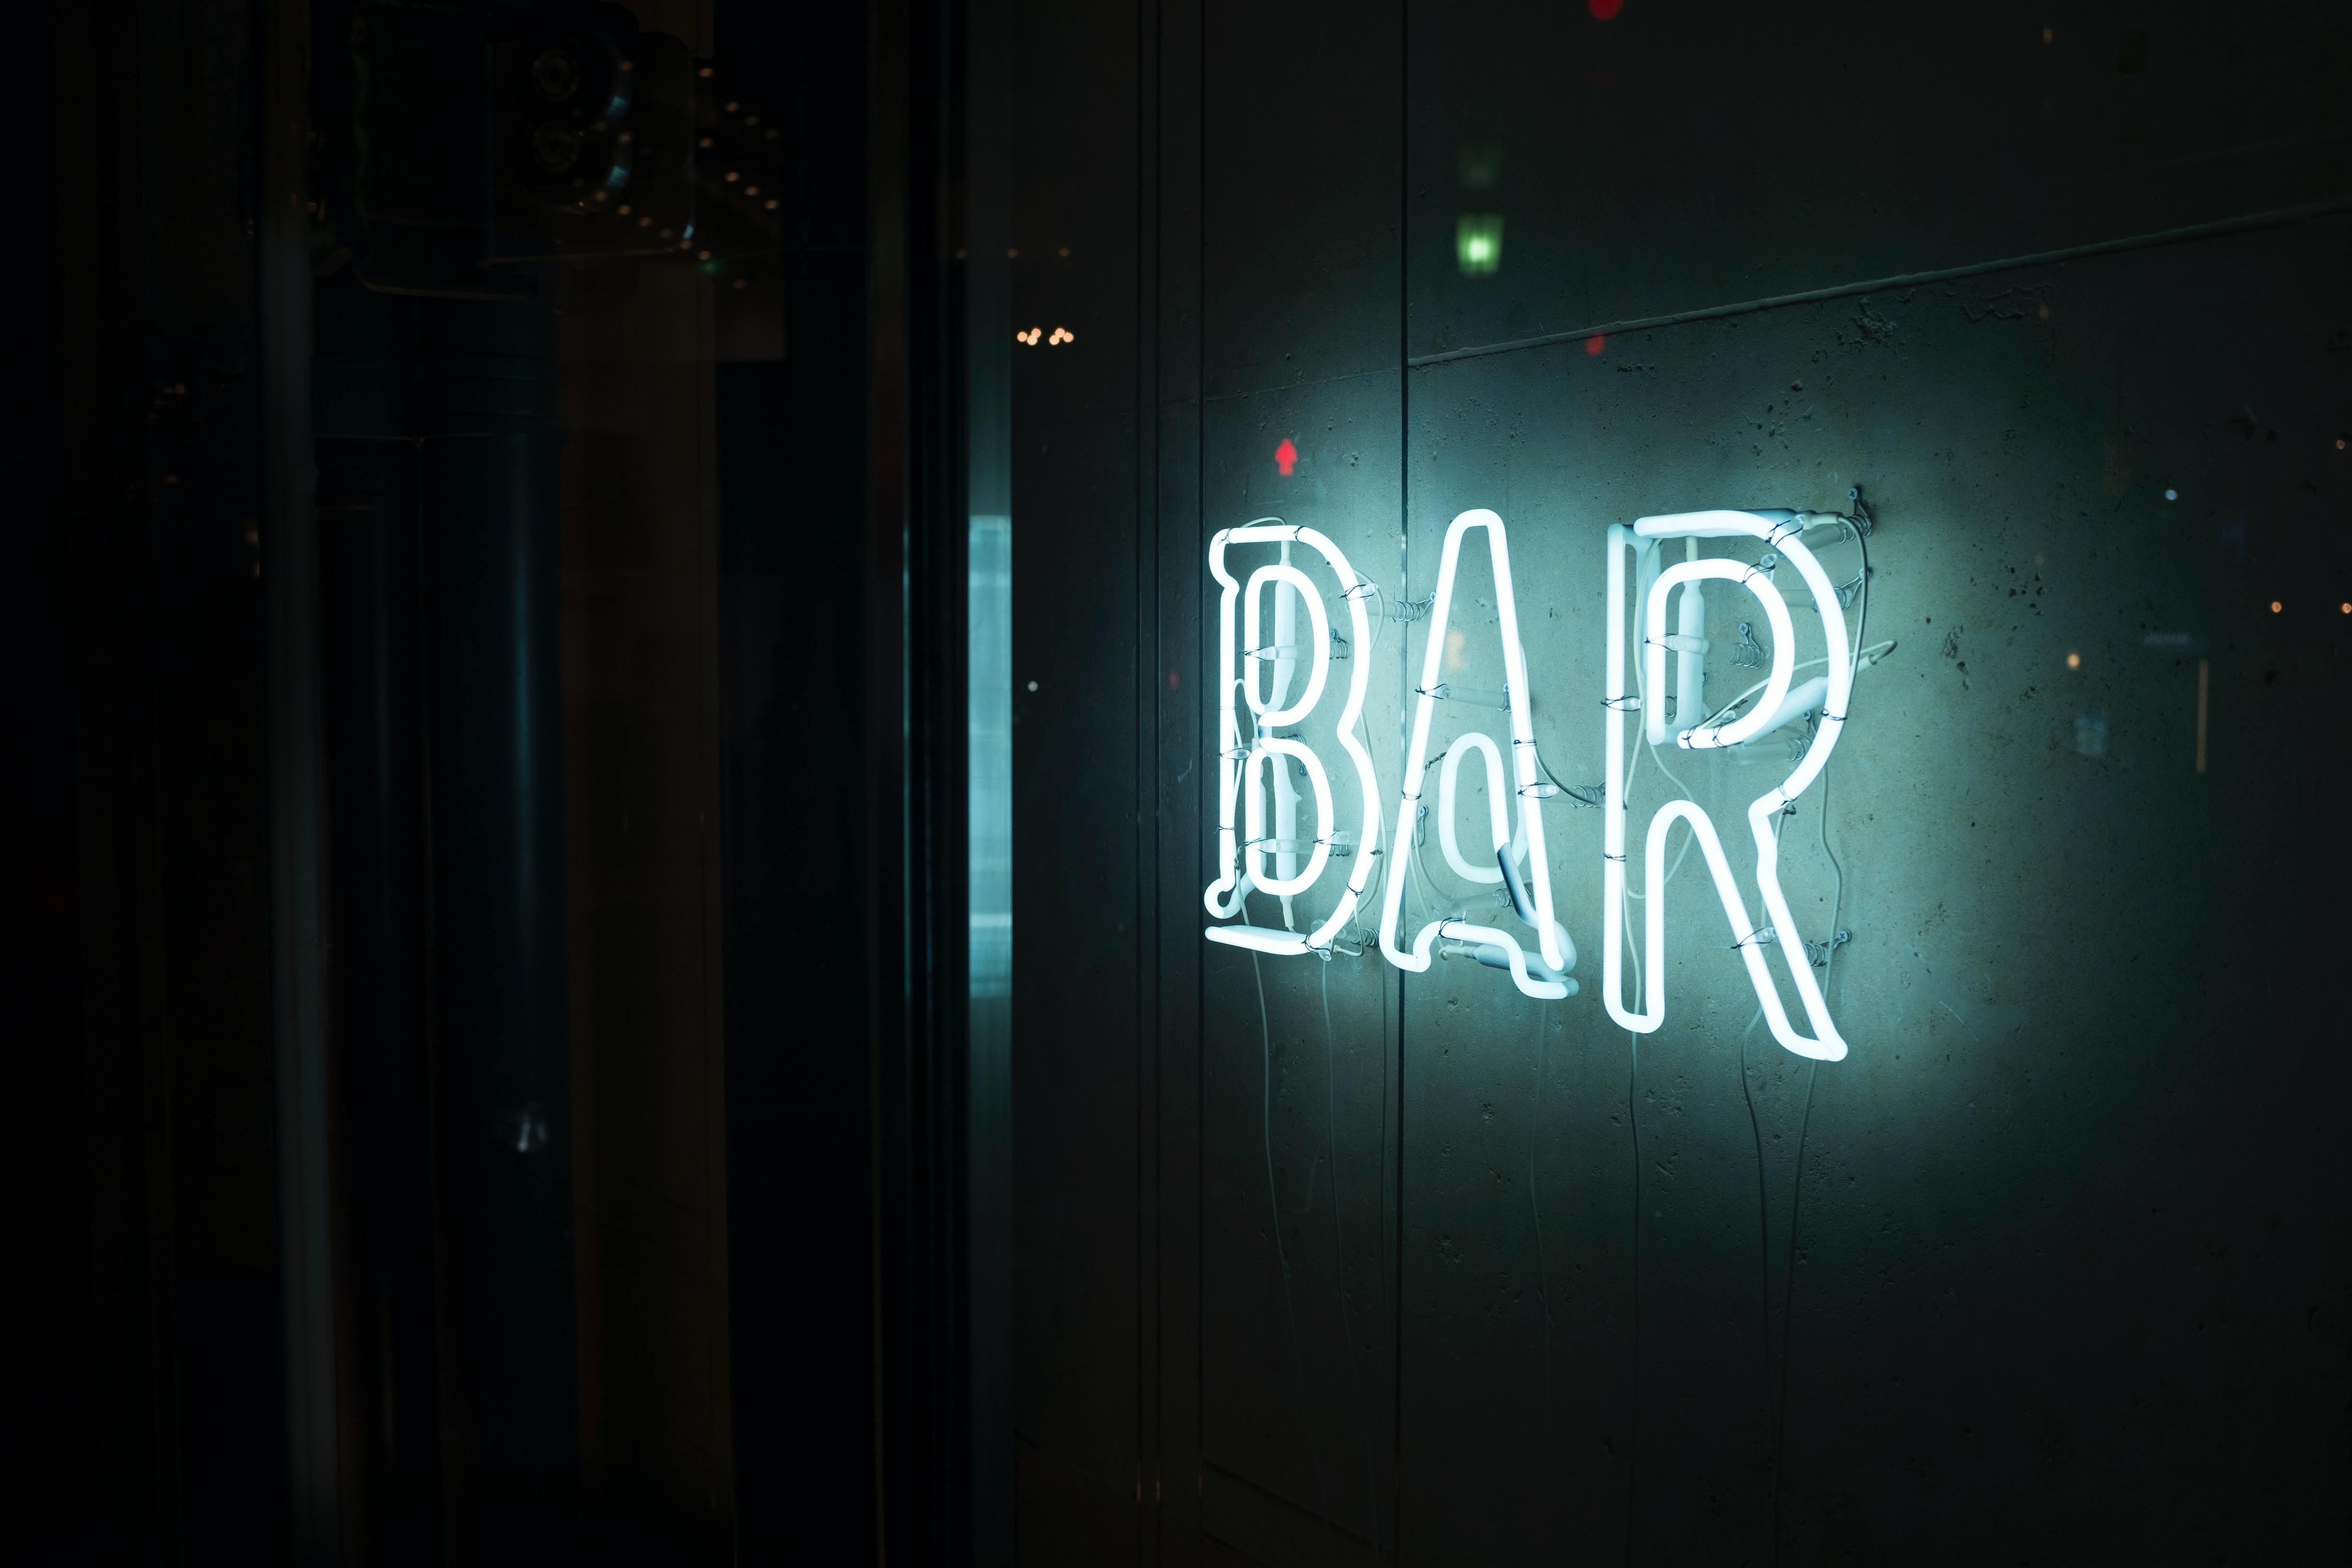 Neon sign saying Bar; image by Alex Knight, via Unsplash.com.